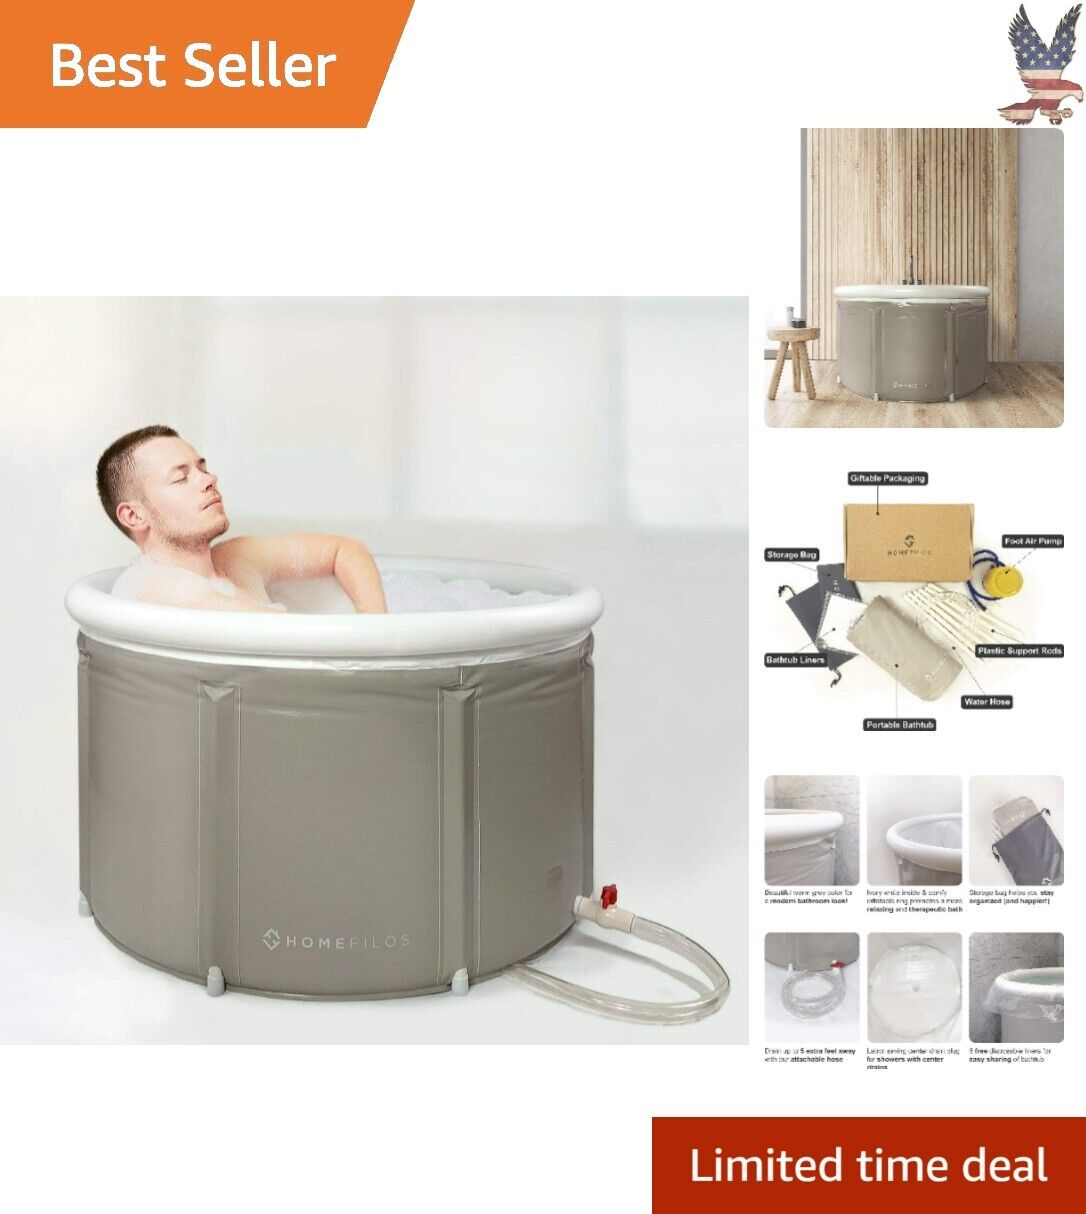 Versatile Multi-Functional Portable Bathtub - Safer & Comfortable Solution